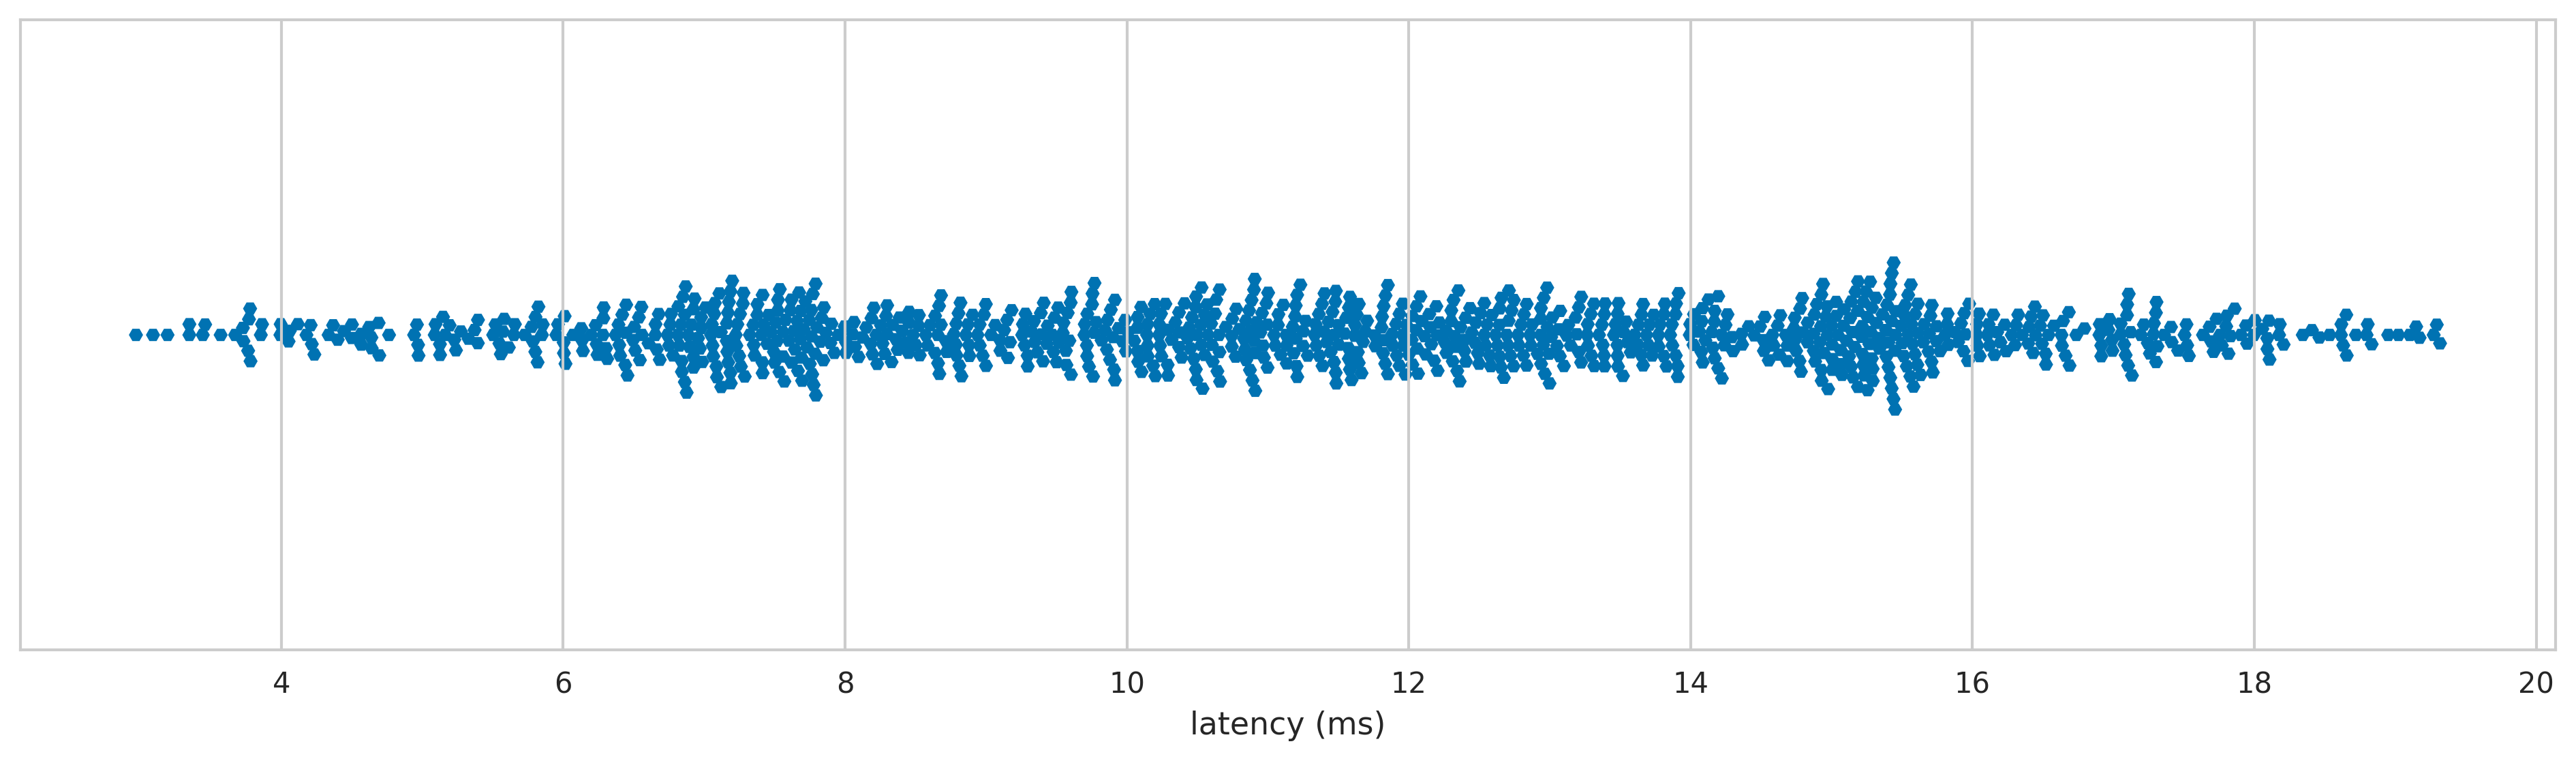 Siemens Nixdorf (PS_2) latency distribution 